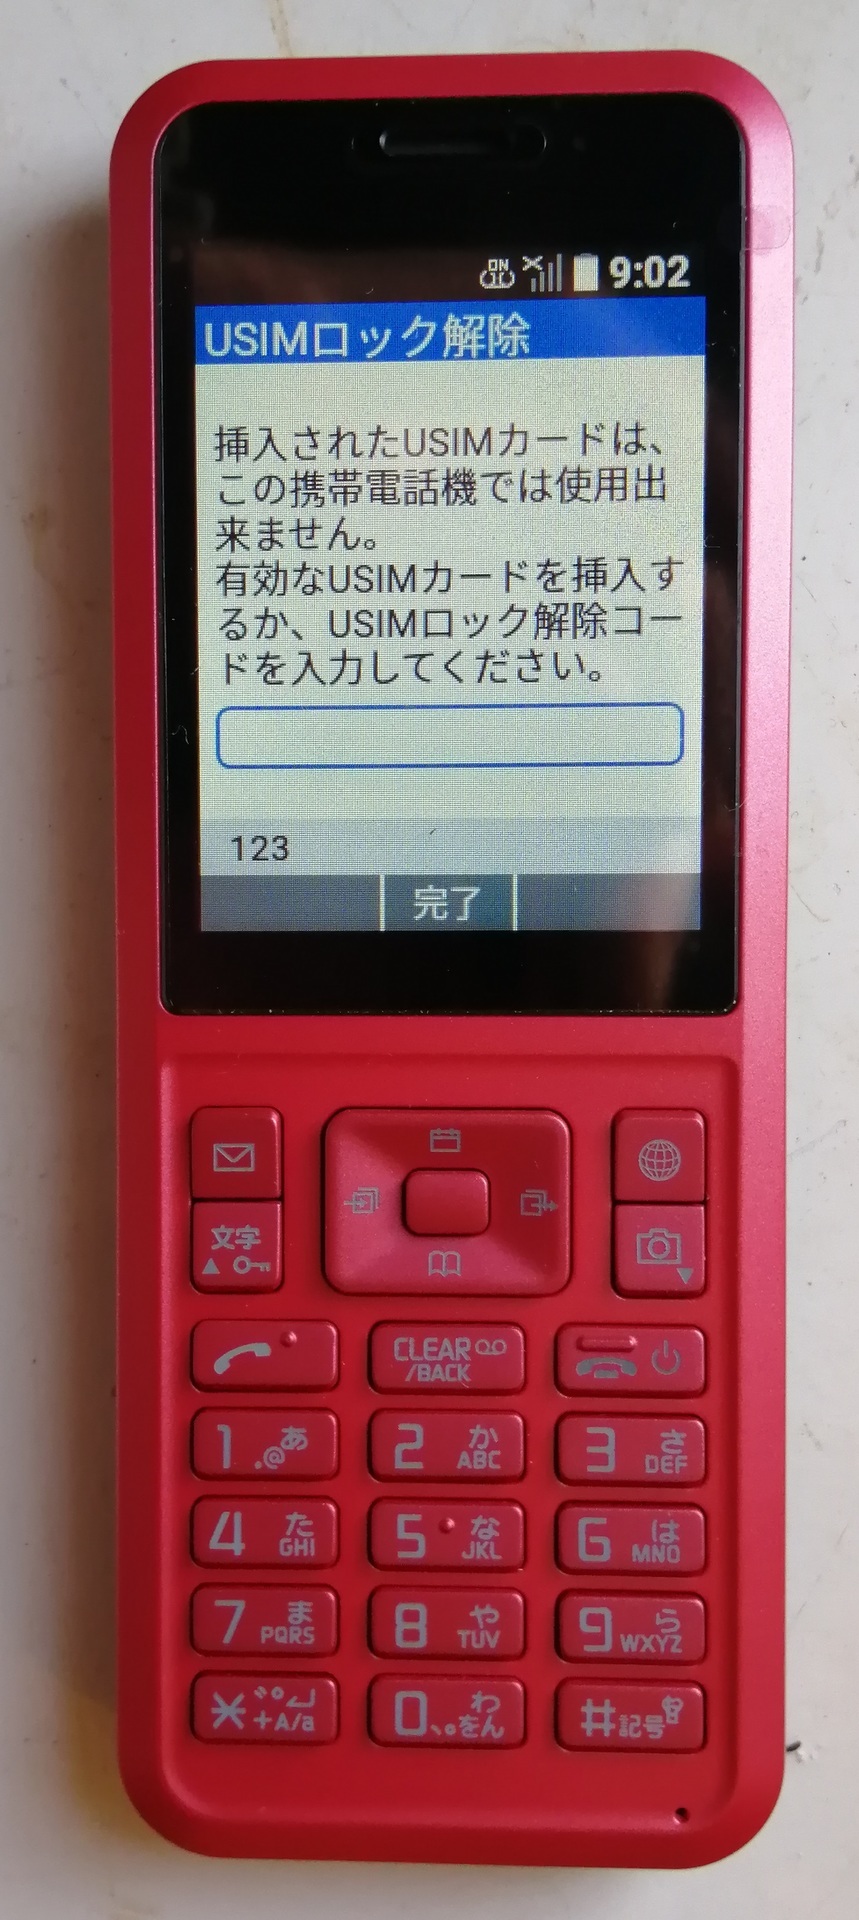 SoftBankのプリペイド携帯シンプルスタイル 月額基本料金0円が凄